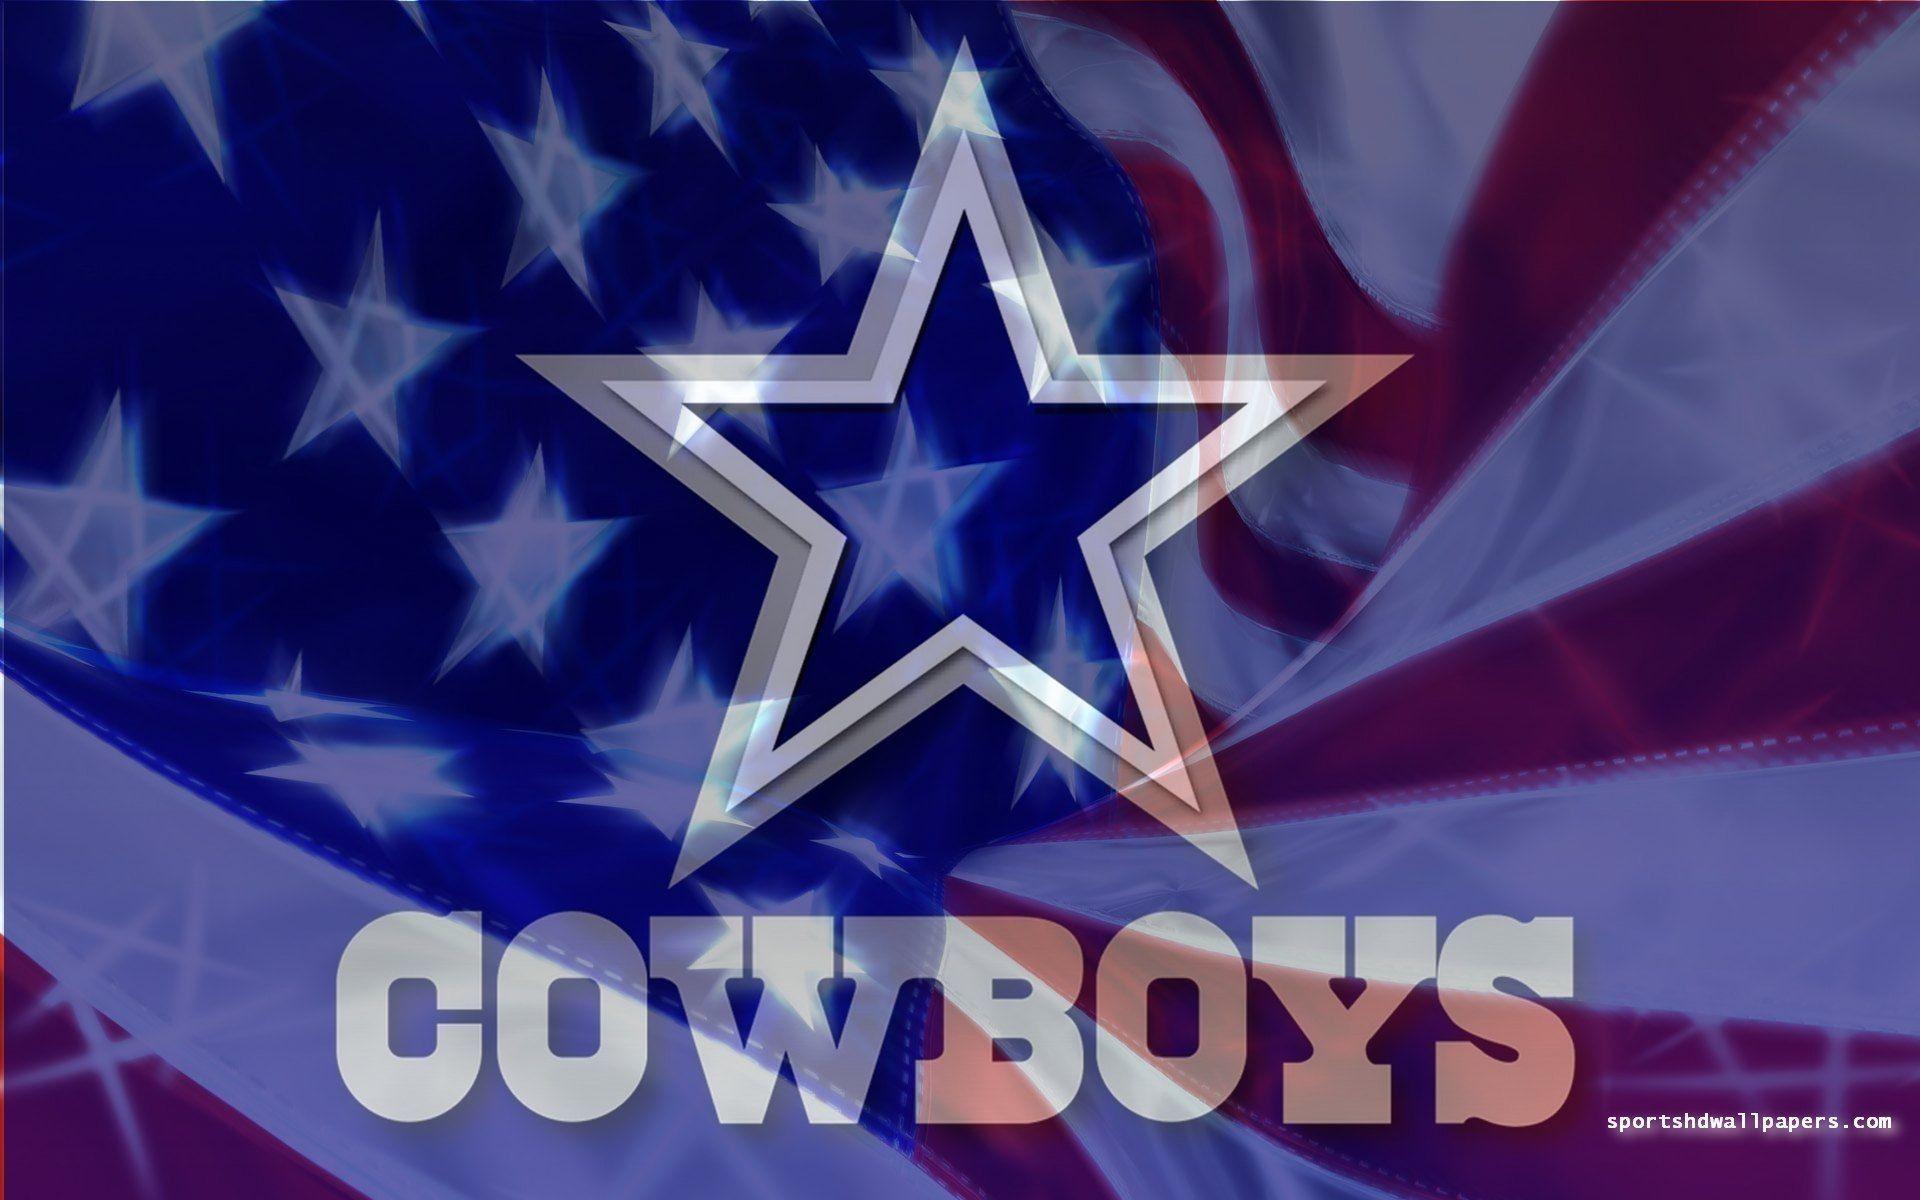 Dallas Cowboys Desktop Image. Beautiful image HD Picture